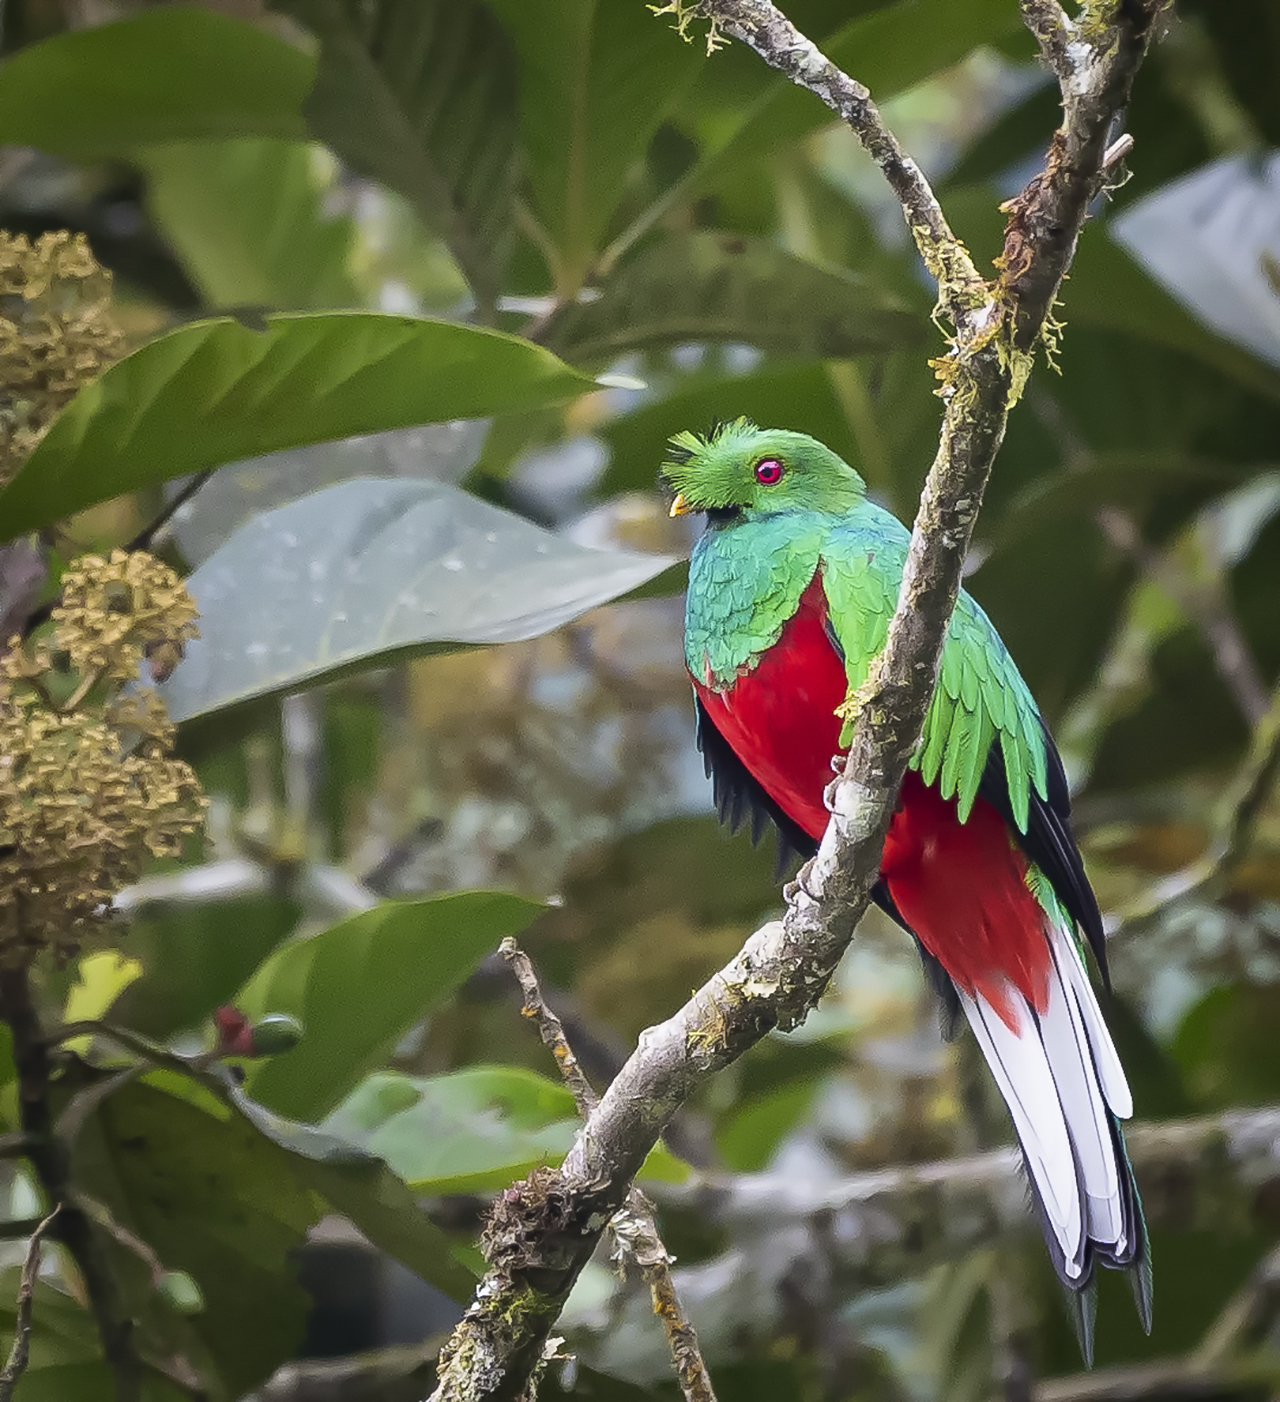 El de la cresta verde encendido Crested Quetzal o Quetzal Crestado (Pharomachrus antisianus).